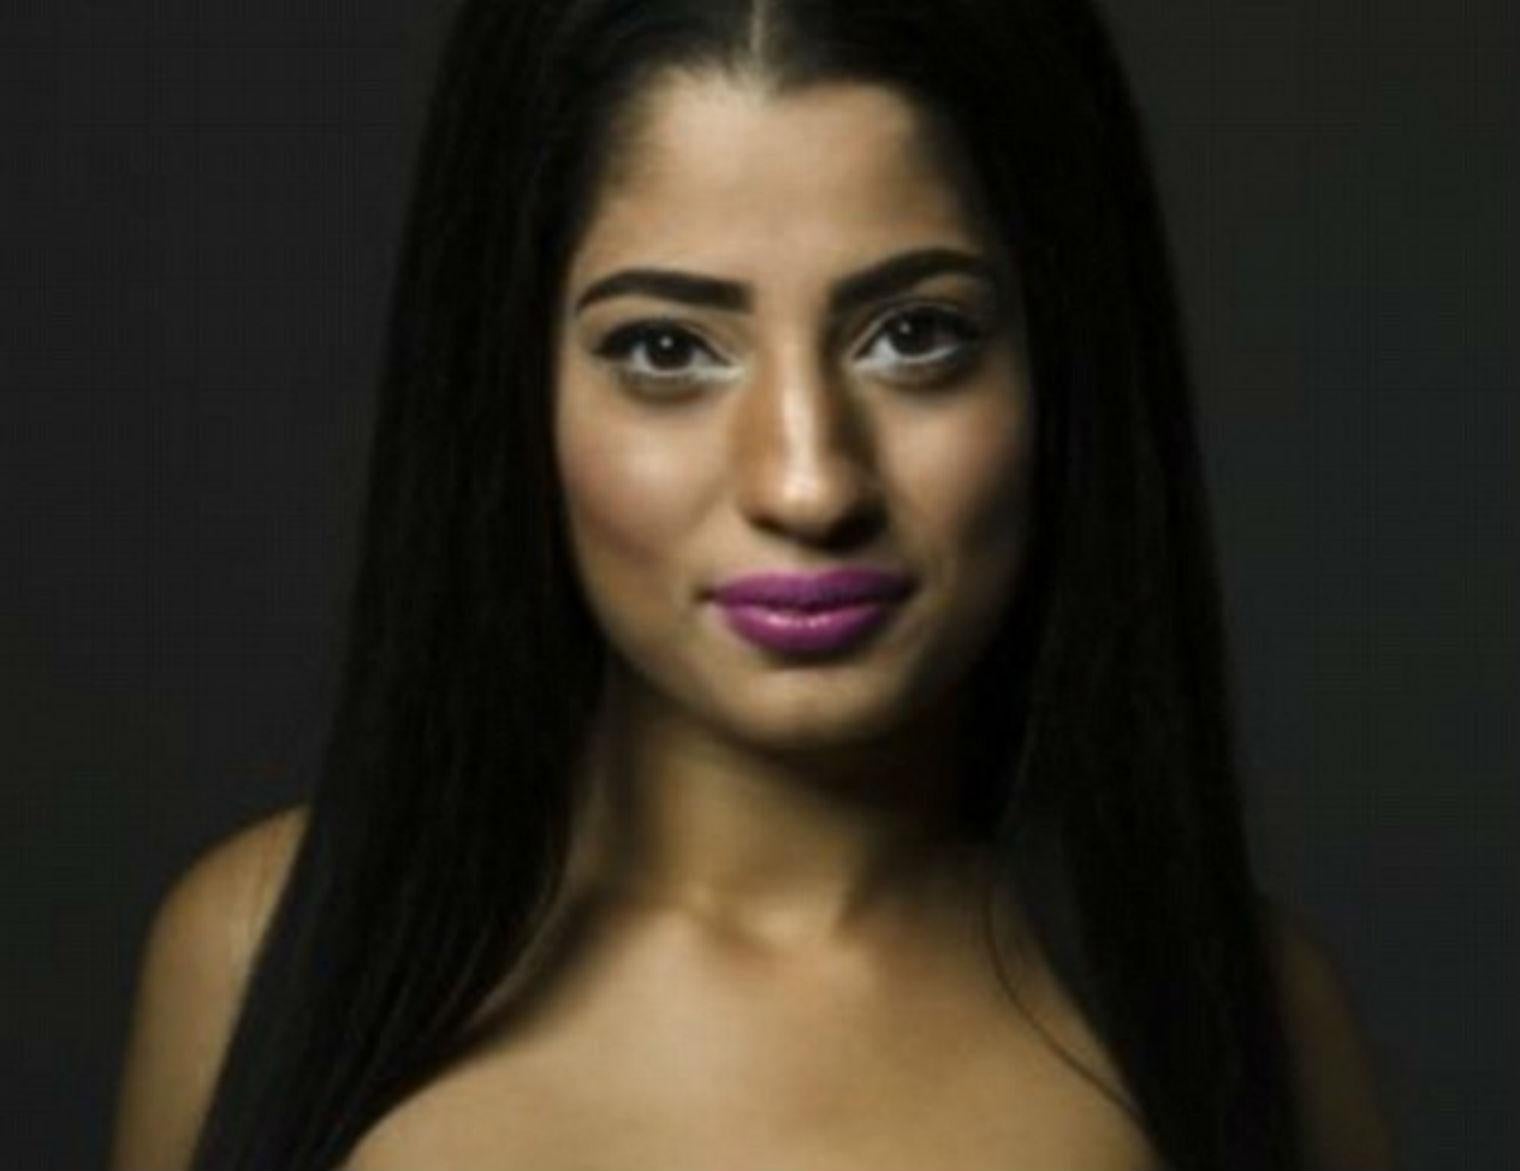 Indian Desi Porn Star Nadia - Nadia Ali: Muslim porn star explains why she got into the ...